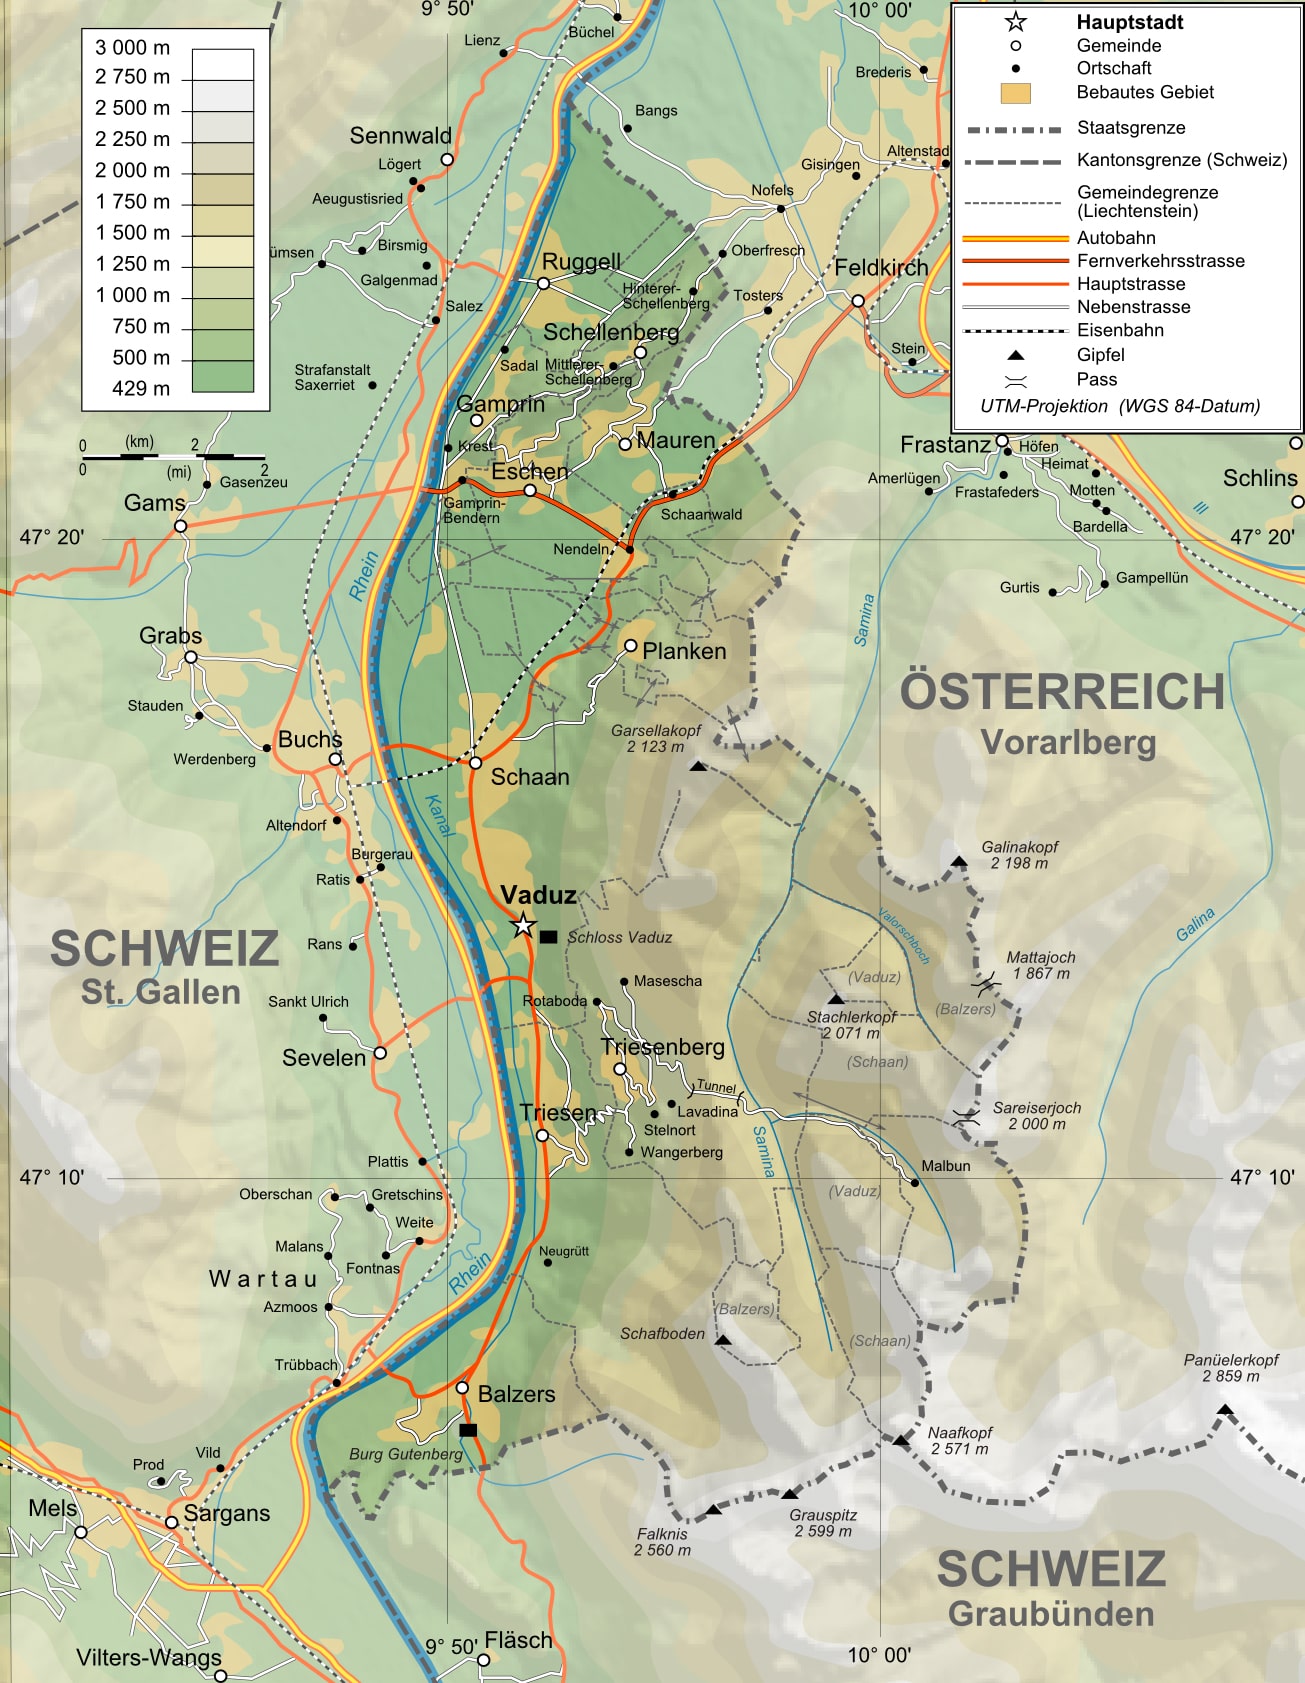 Carte du Liechtenstein.